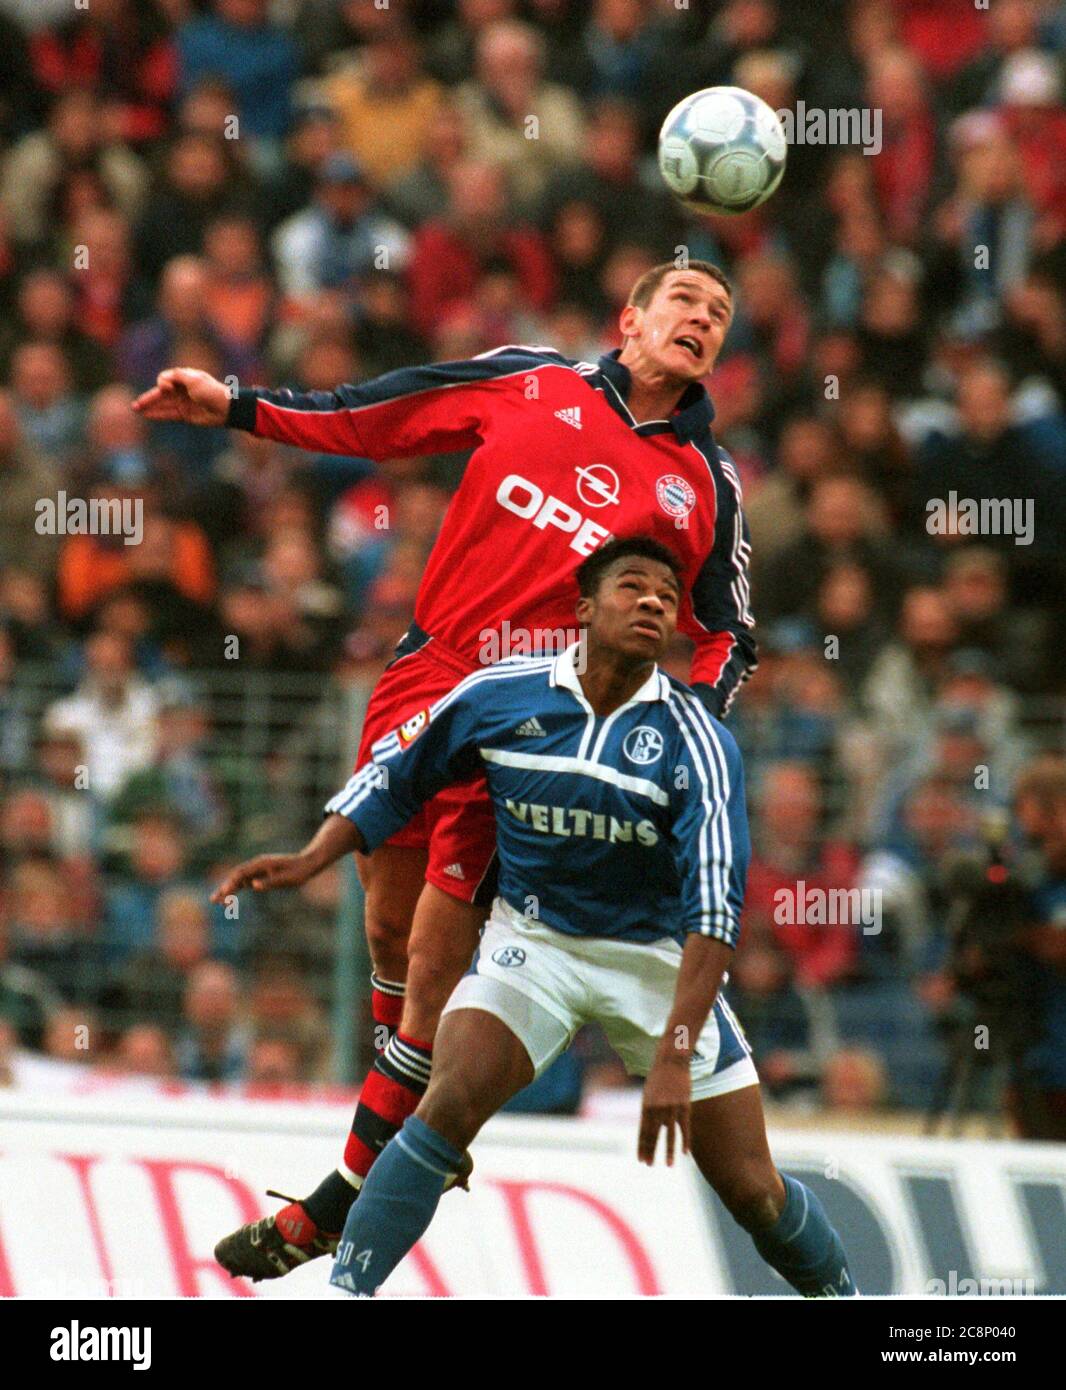 Parkstadion Gelsenkirchen Germany 11.11.2000, Football: 1st German Bundesliga, Schalke 04 (S04, blue) vs FC Bayern Munich (FCB, red) 3:2 — Patrick ANDERSSON (FCB), Emile MPENZA (S04) Stock Photo